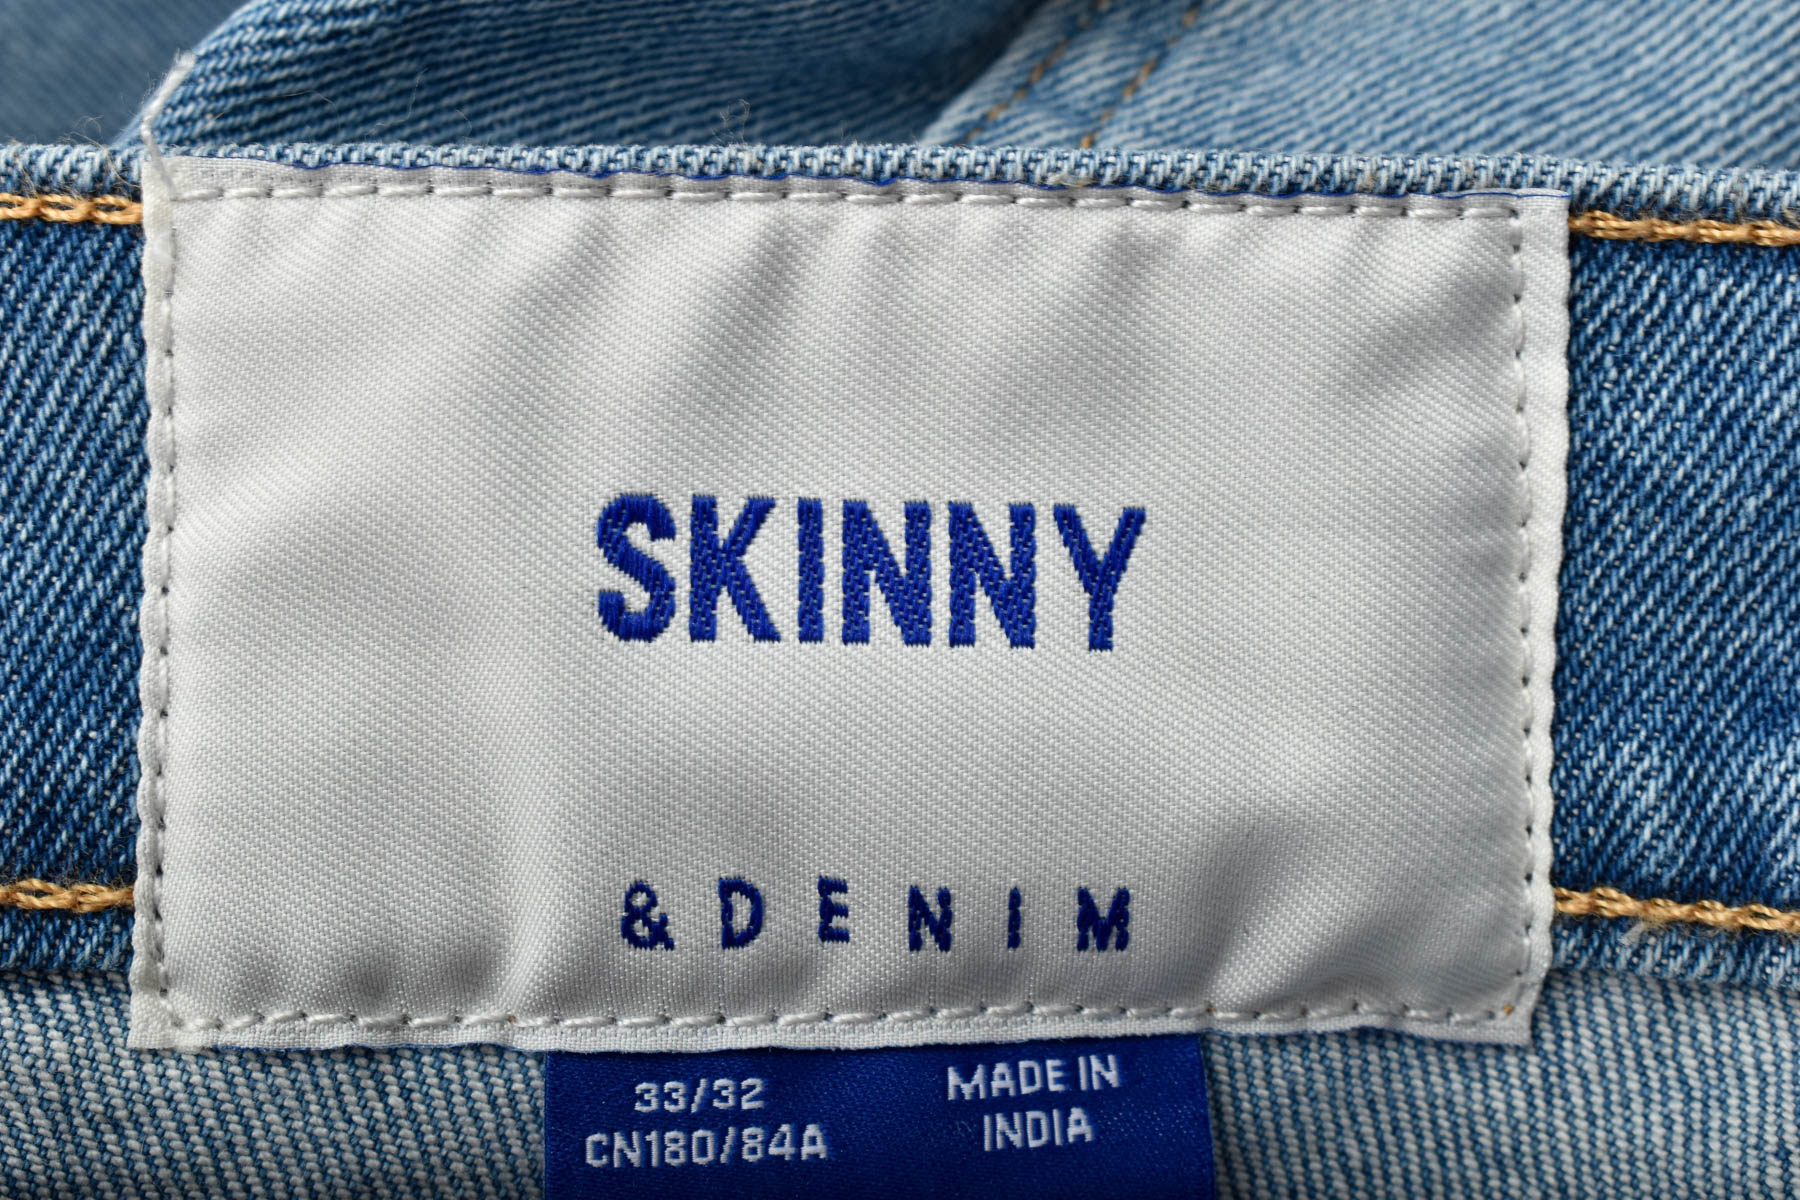 Men's jeans - & DENIM - 2